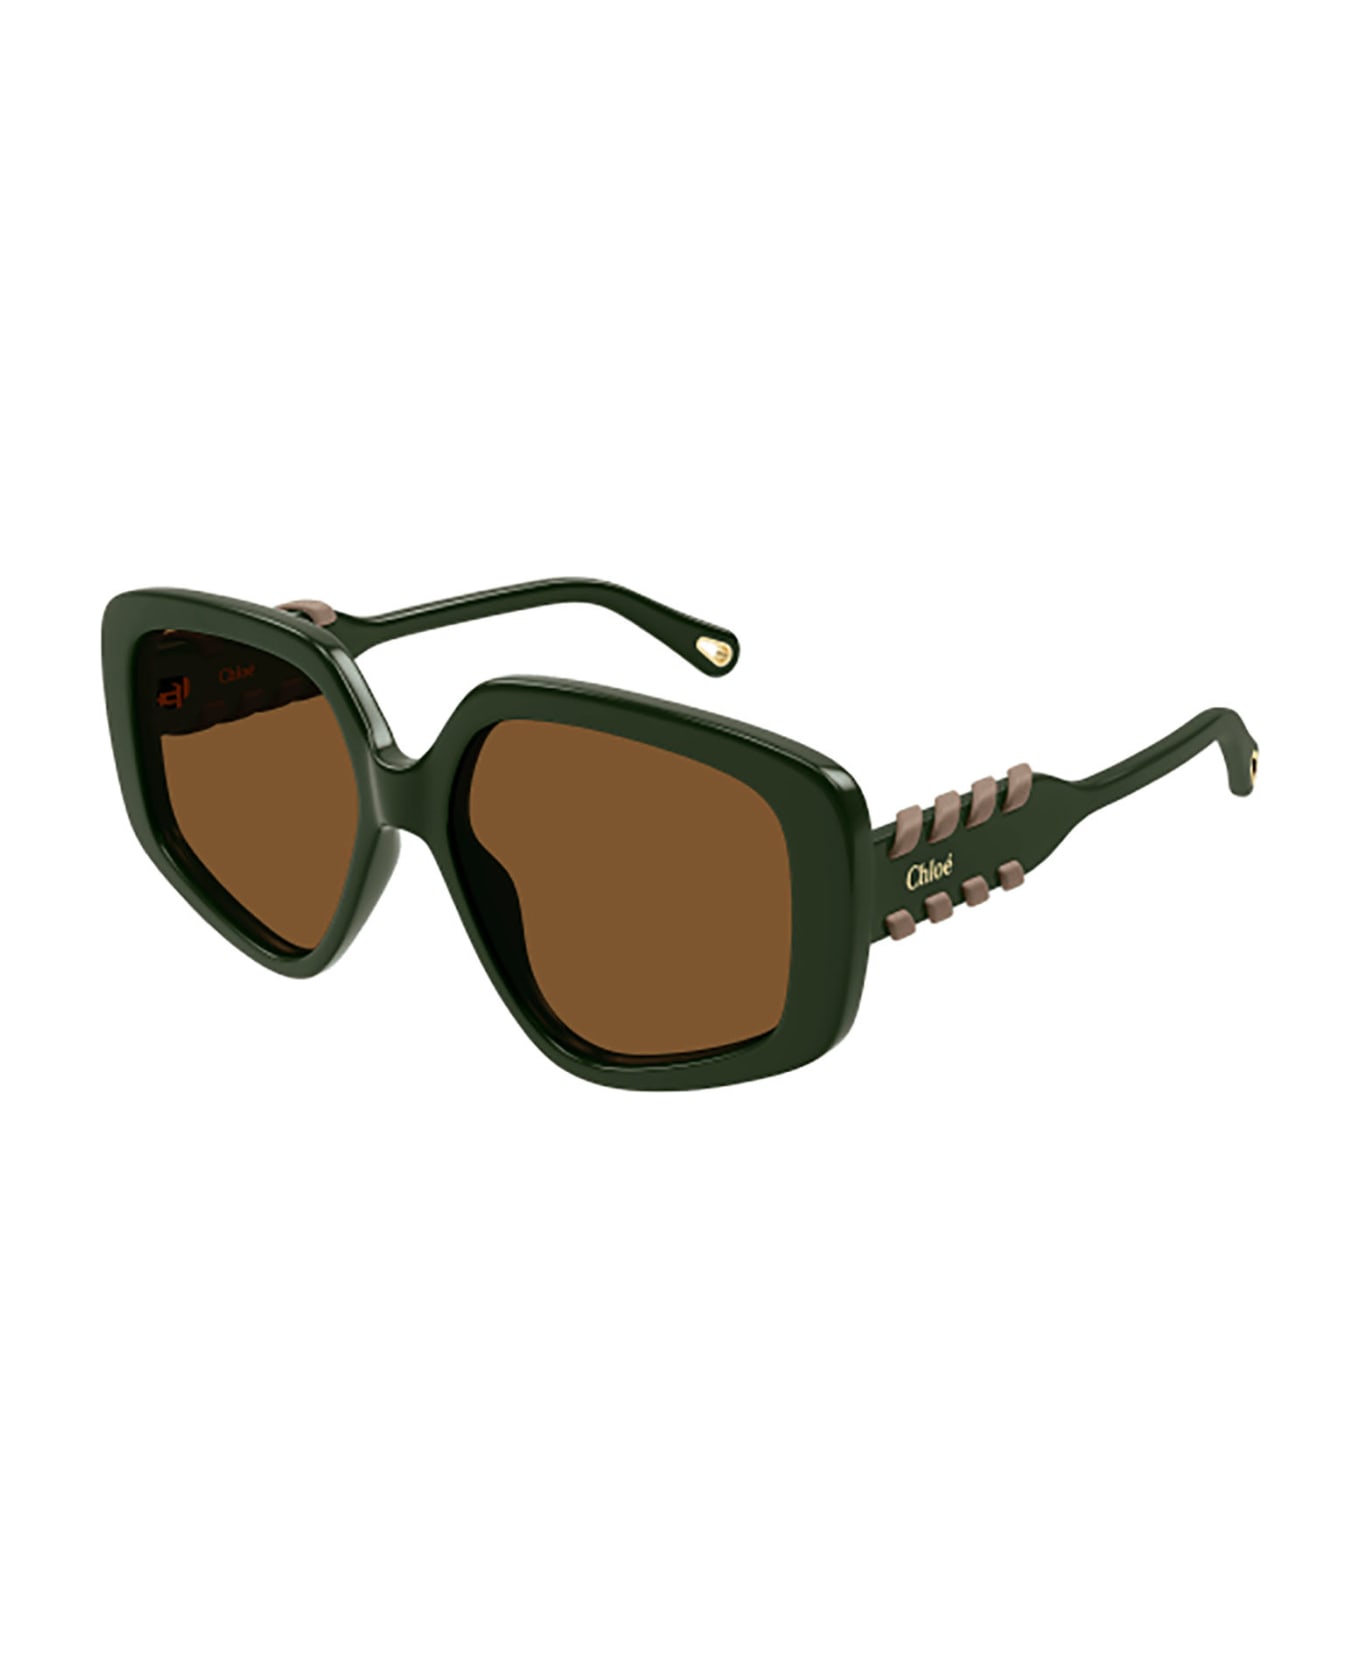 Chloé Eyewear CH0210S Sunglasses - Green Green Brown